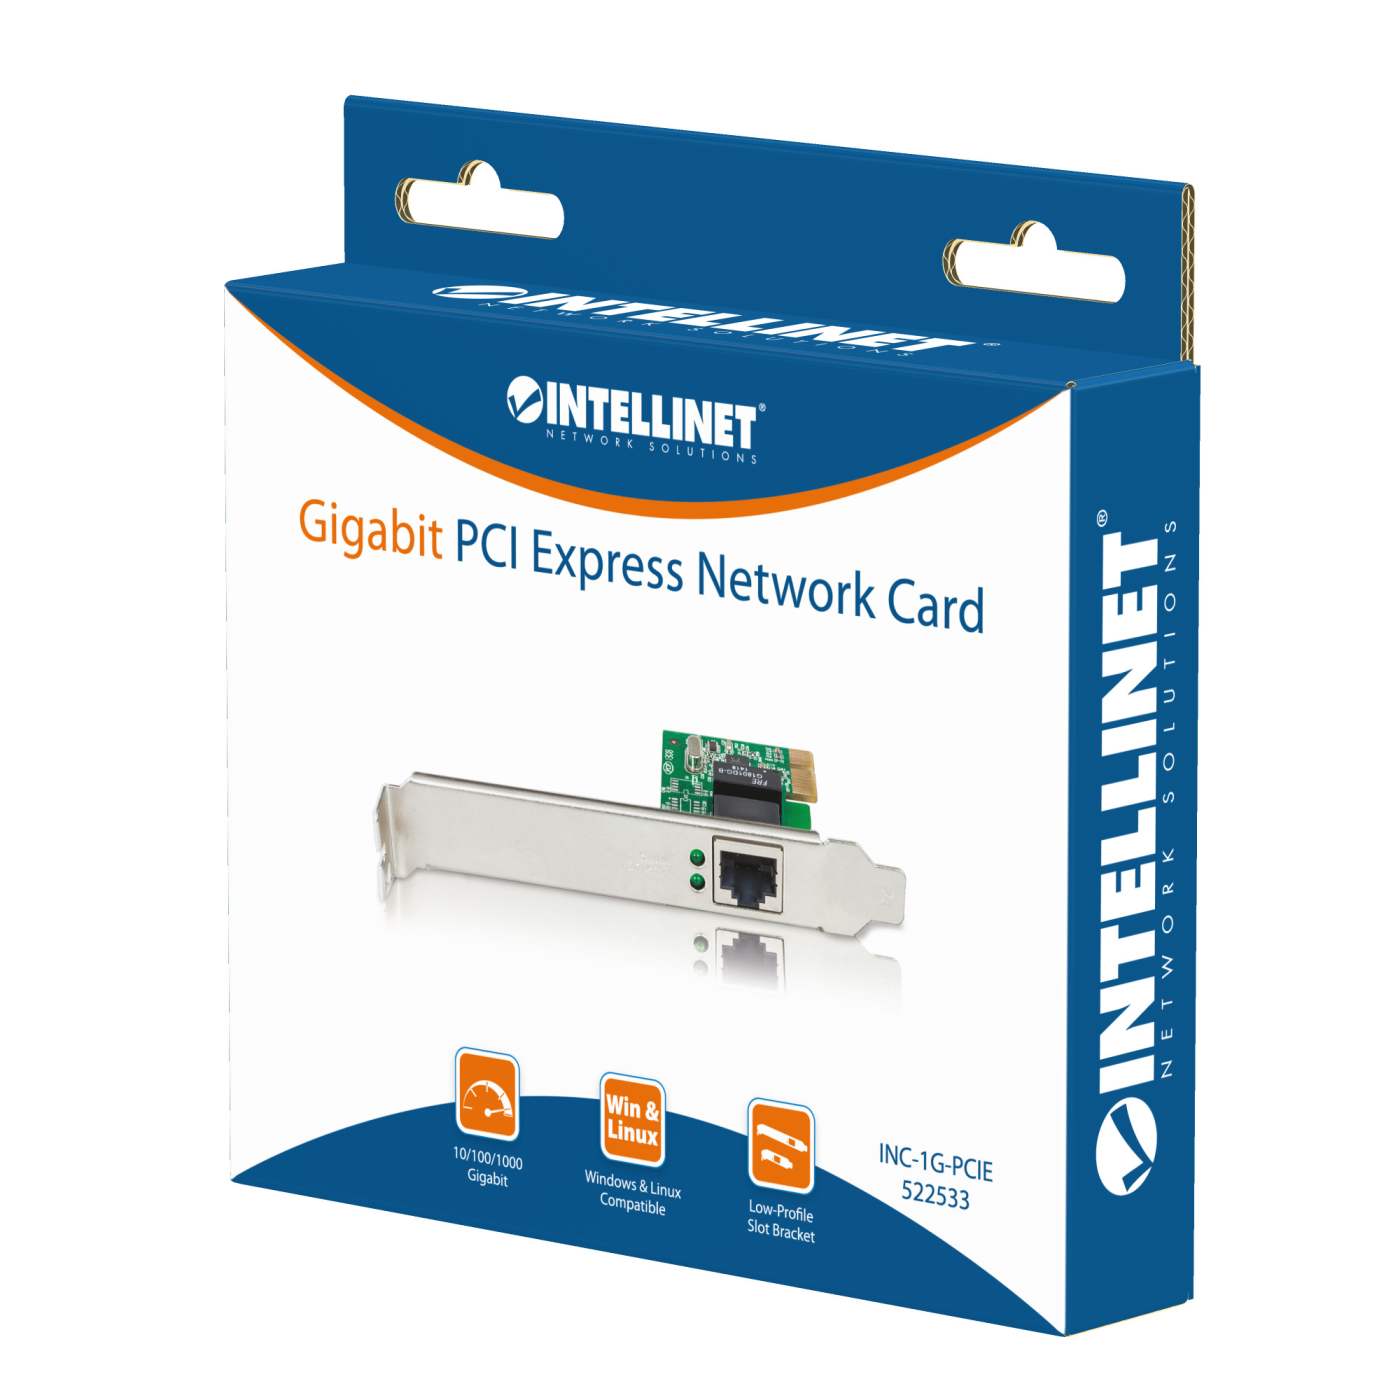 Gigabit PCI Express Network Card Packaging Image 2